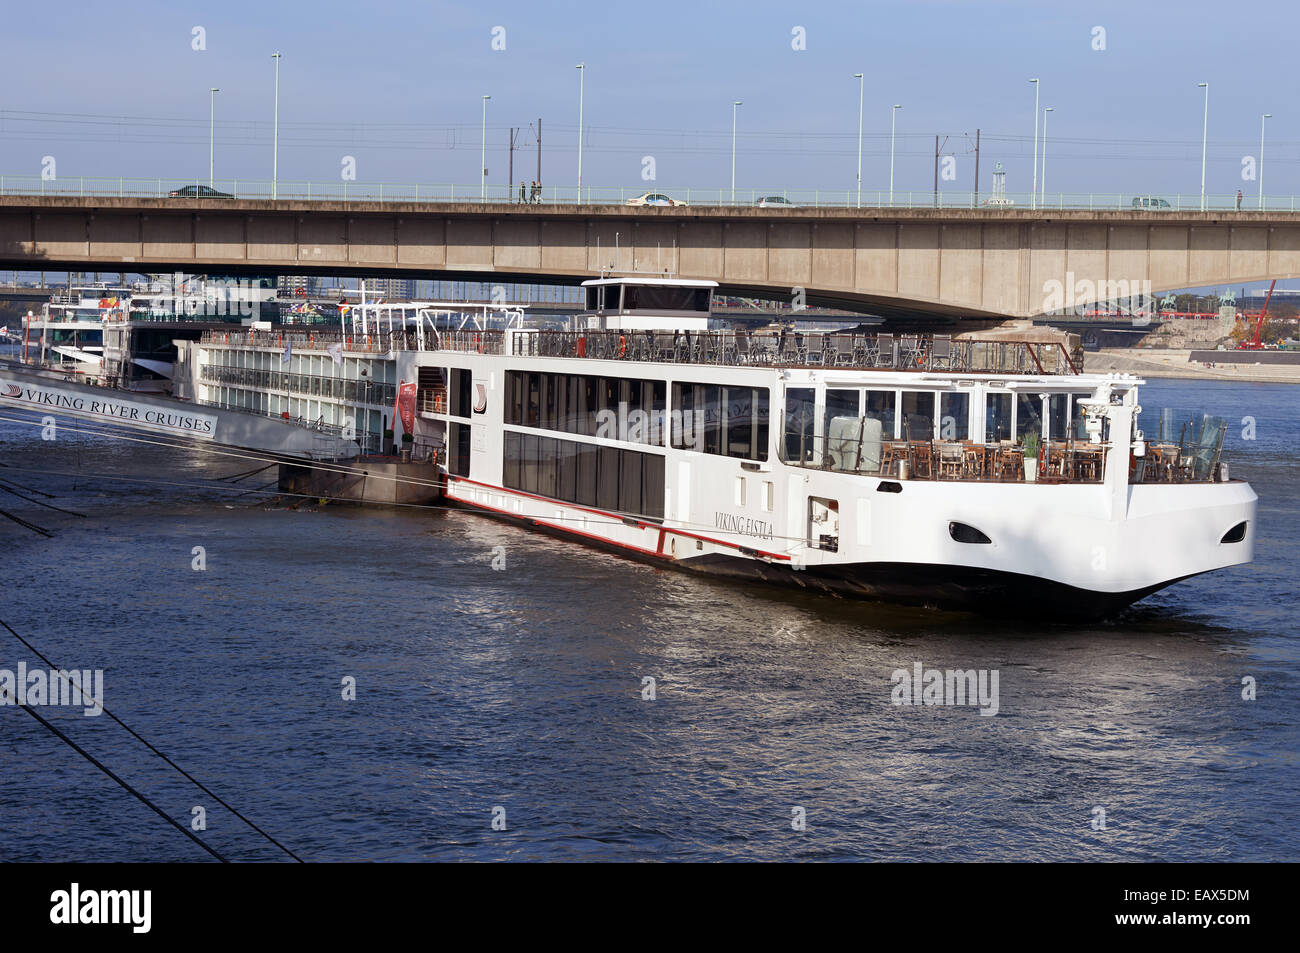 Viking Flusskreuzfahrten "Elstla" am Rhein, Köln, Deutschland. Stockfoto